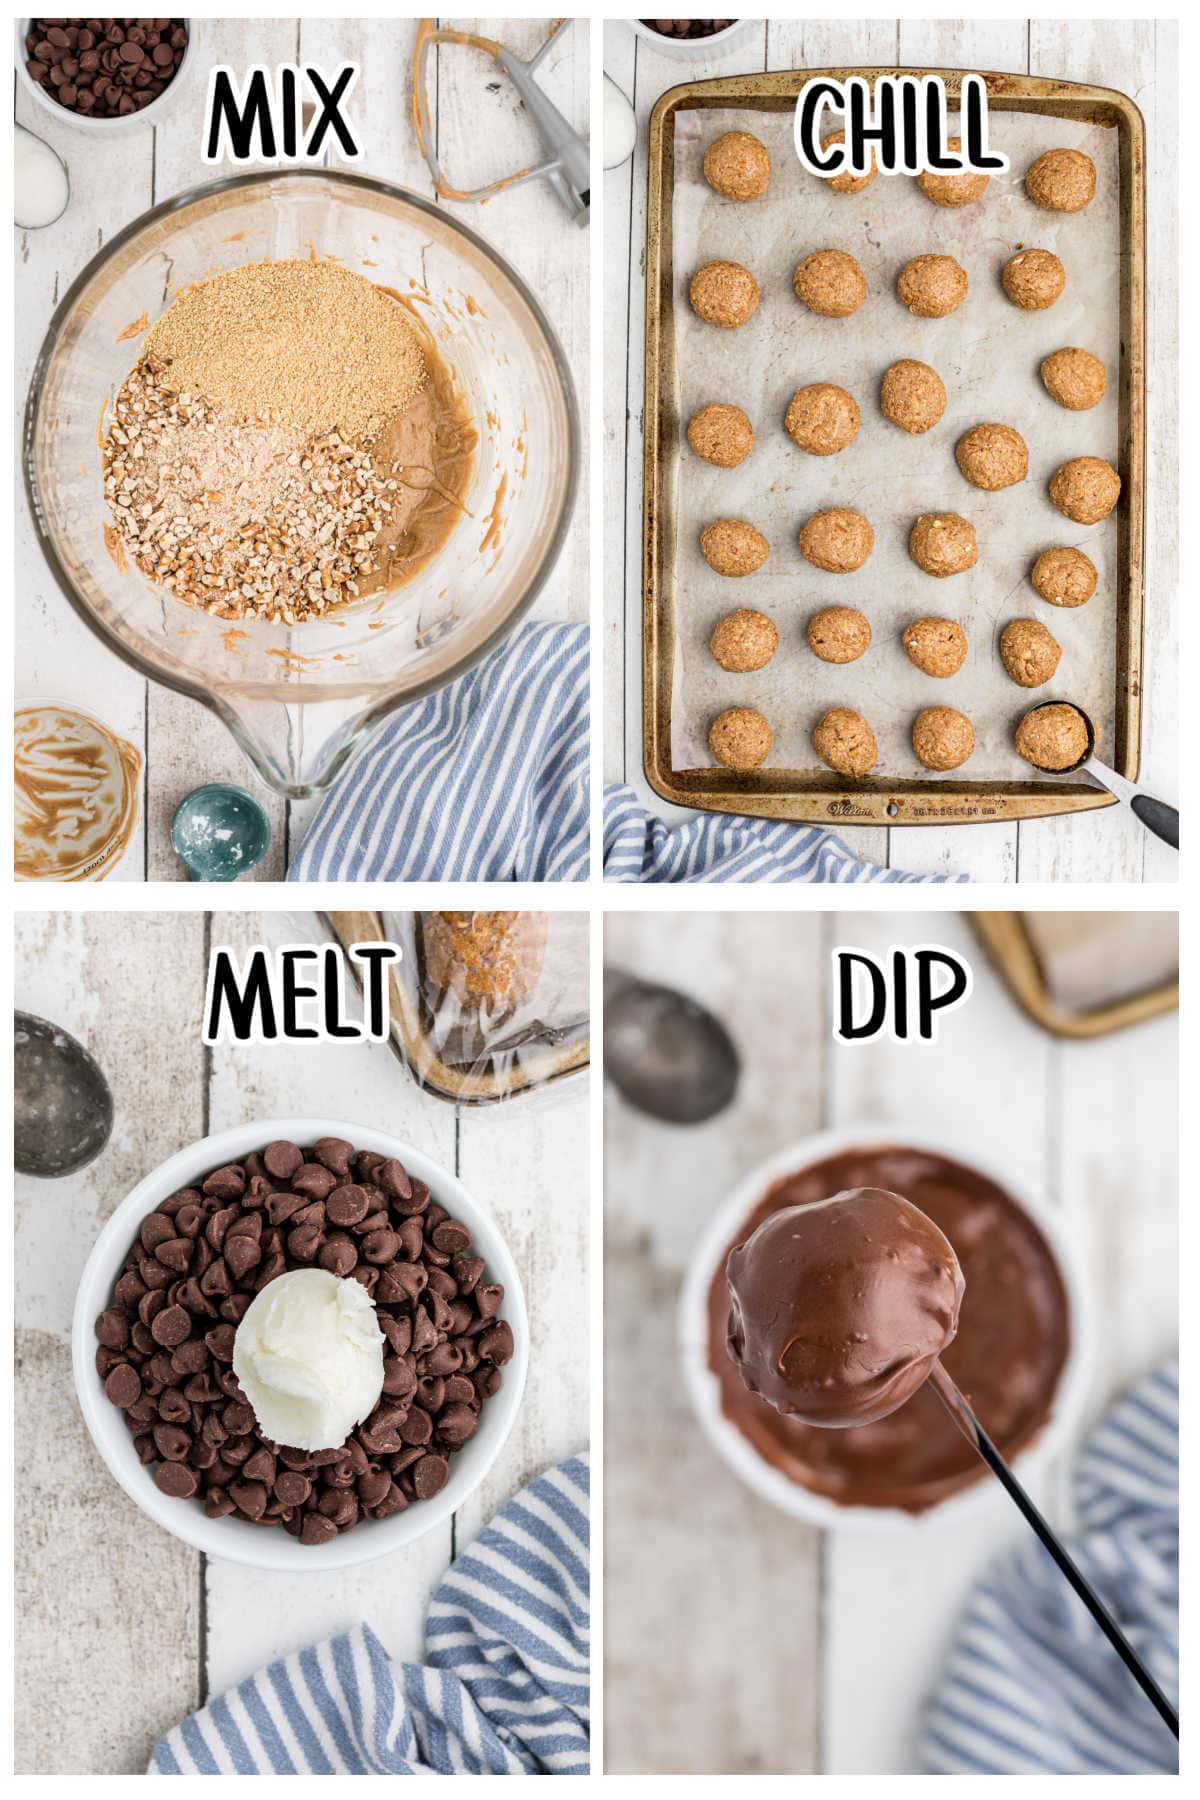 Step by step images showing how to make pretzel bites.